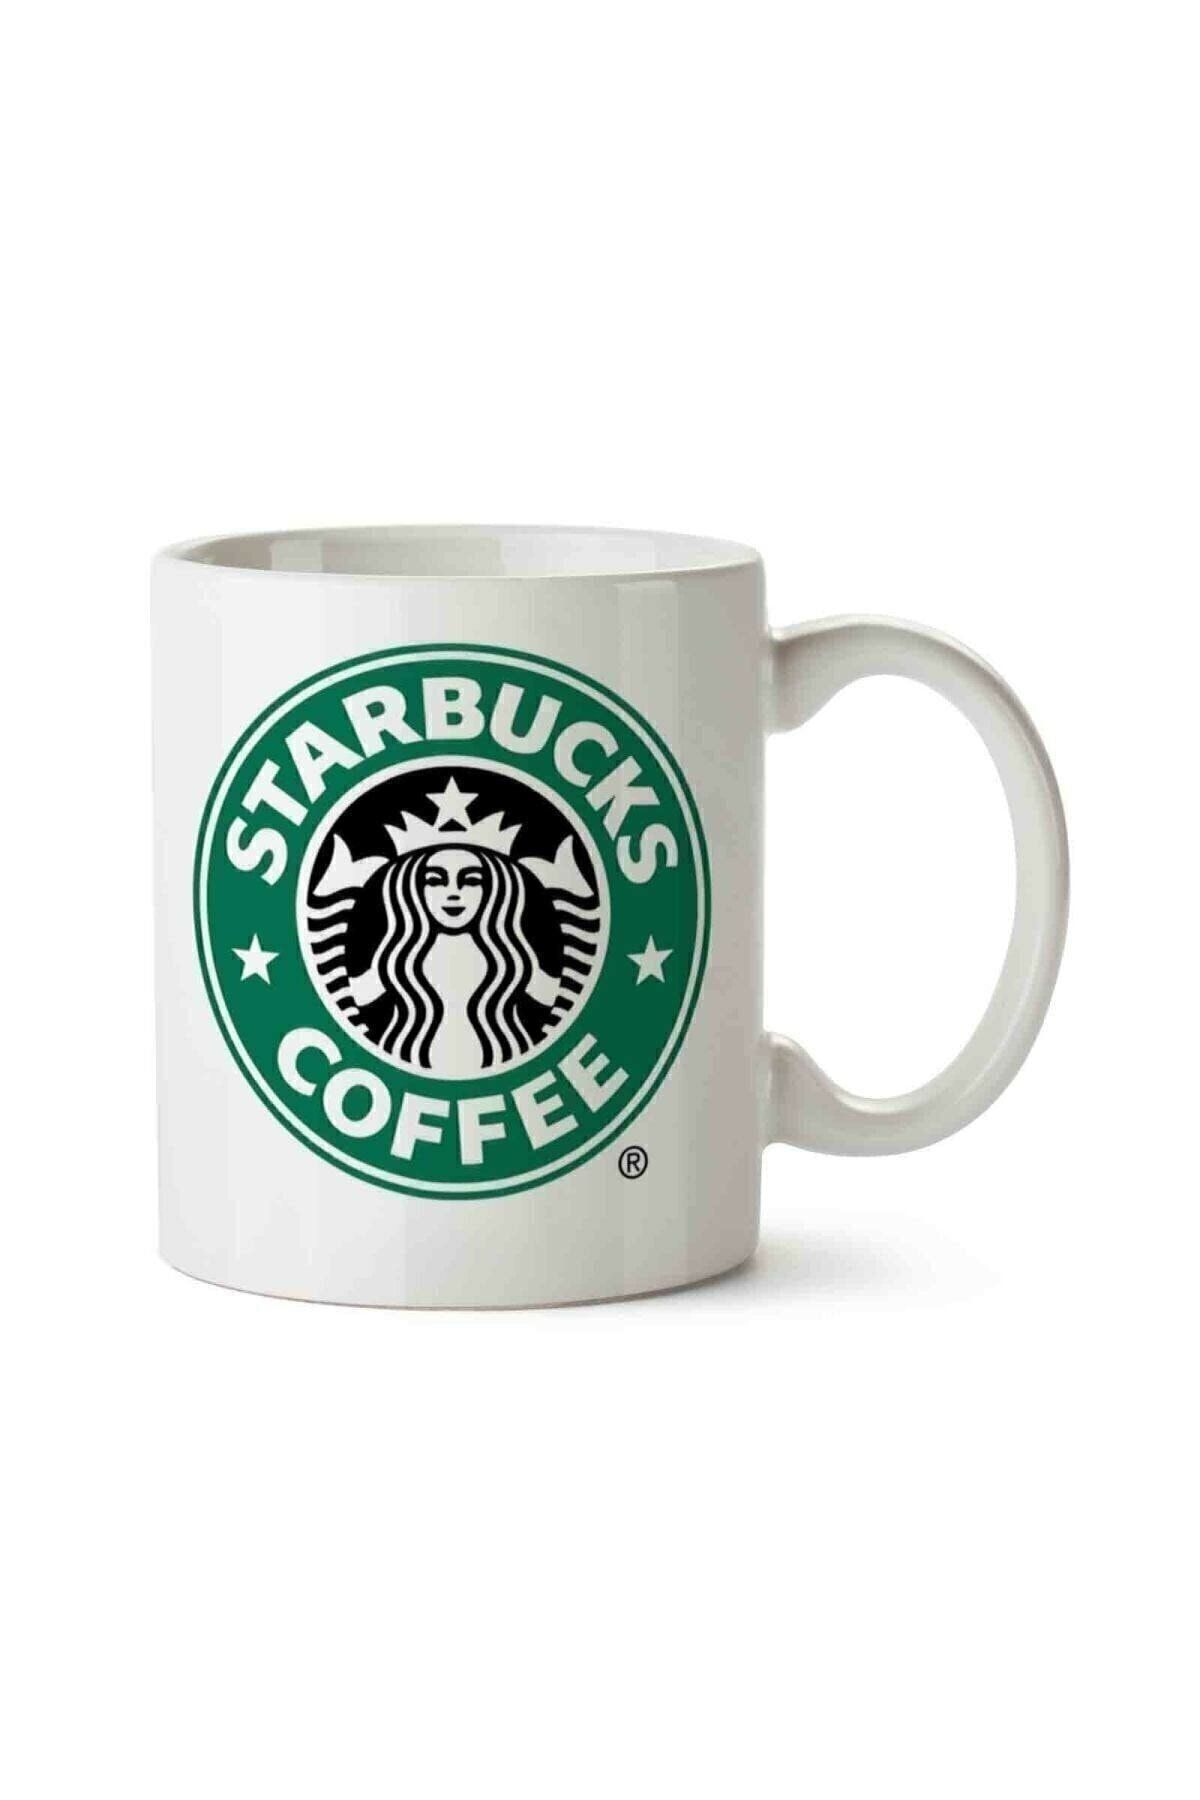 Genel Markalar Starbucks Coffee Porselen Kupa Bardak